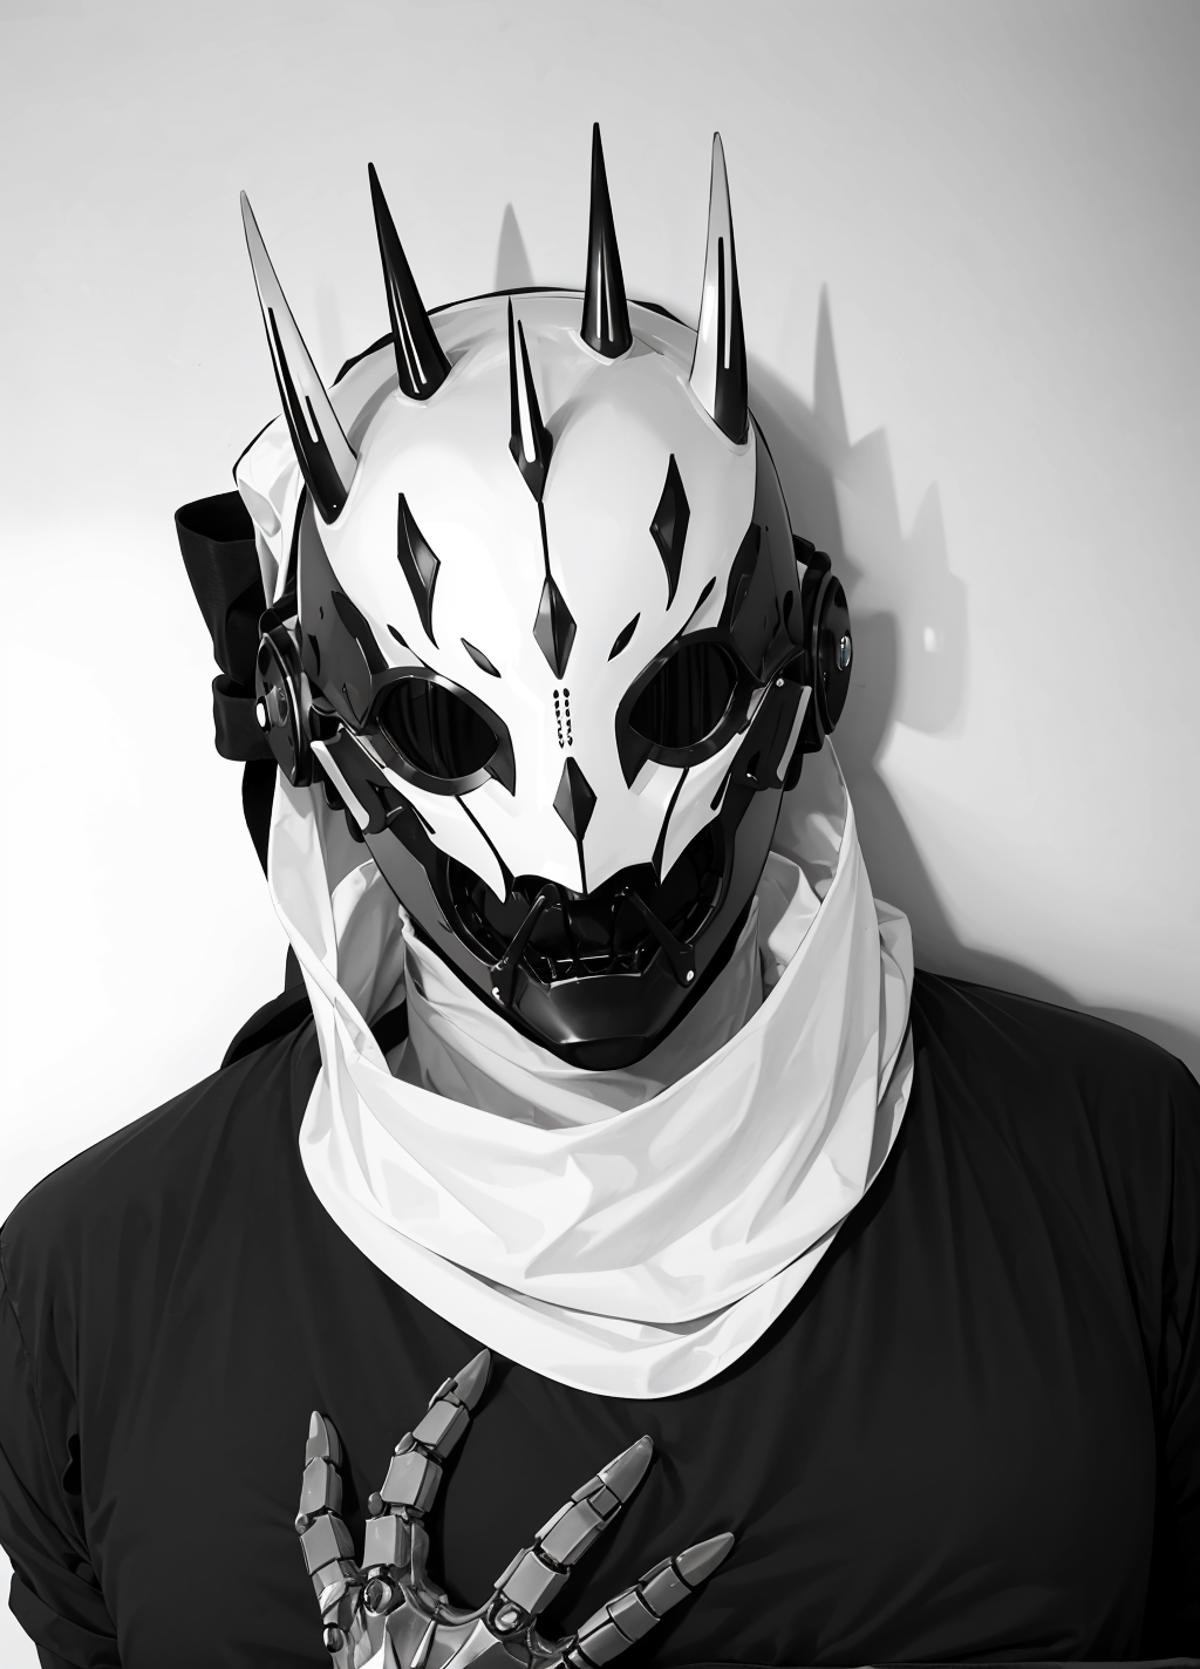 FRM (Full Random Mask) image by Lembont